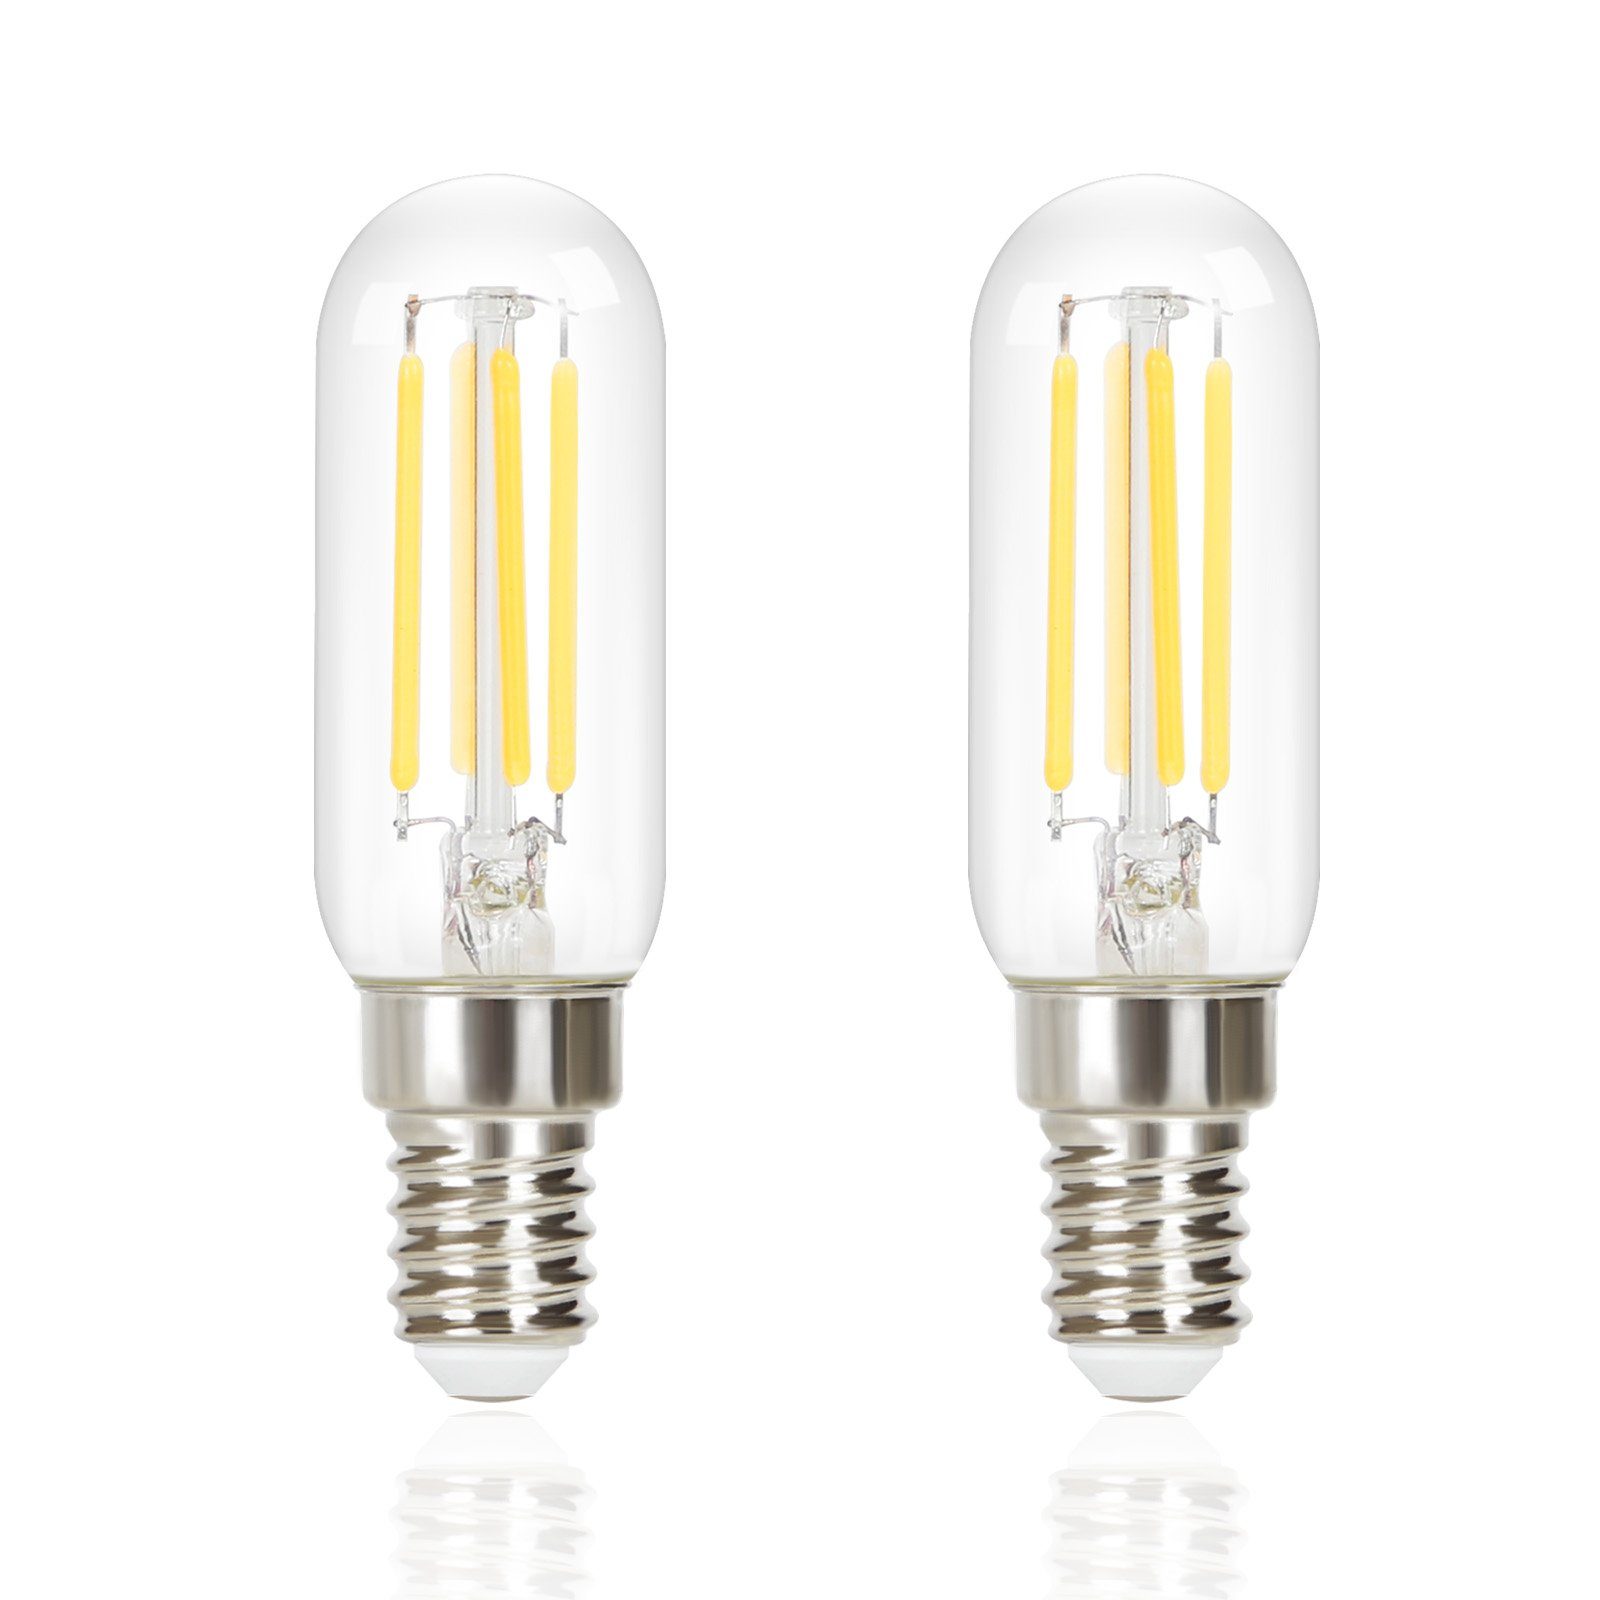 Nettlife LED-Leuchtmittel LED E14 Vintage Birnen 4W Glühbirnen T25 Lampe 6000K Kaltweiß, E14, 2 St., Kaltweiß